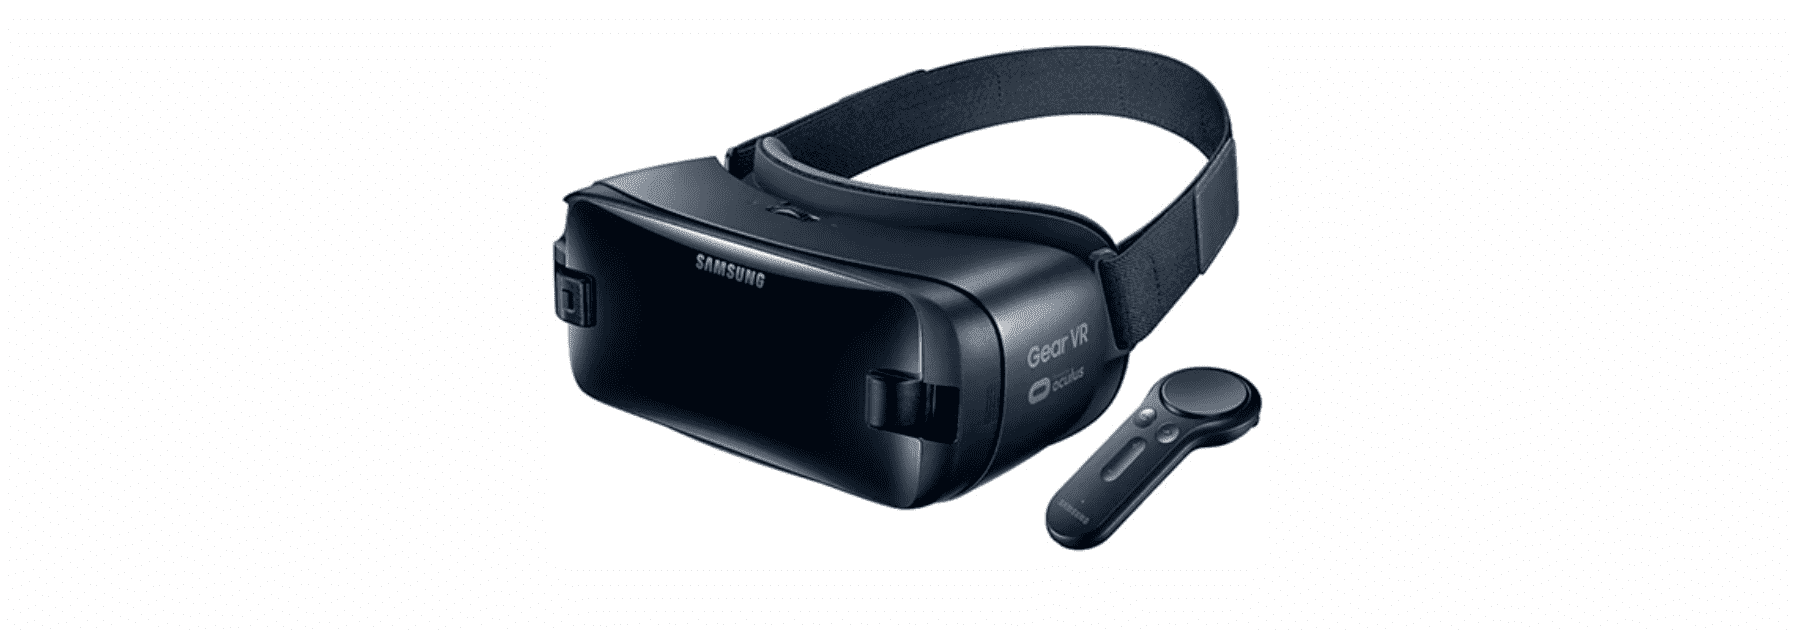 Samsung Gear VR virtual reality glasses